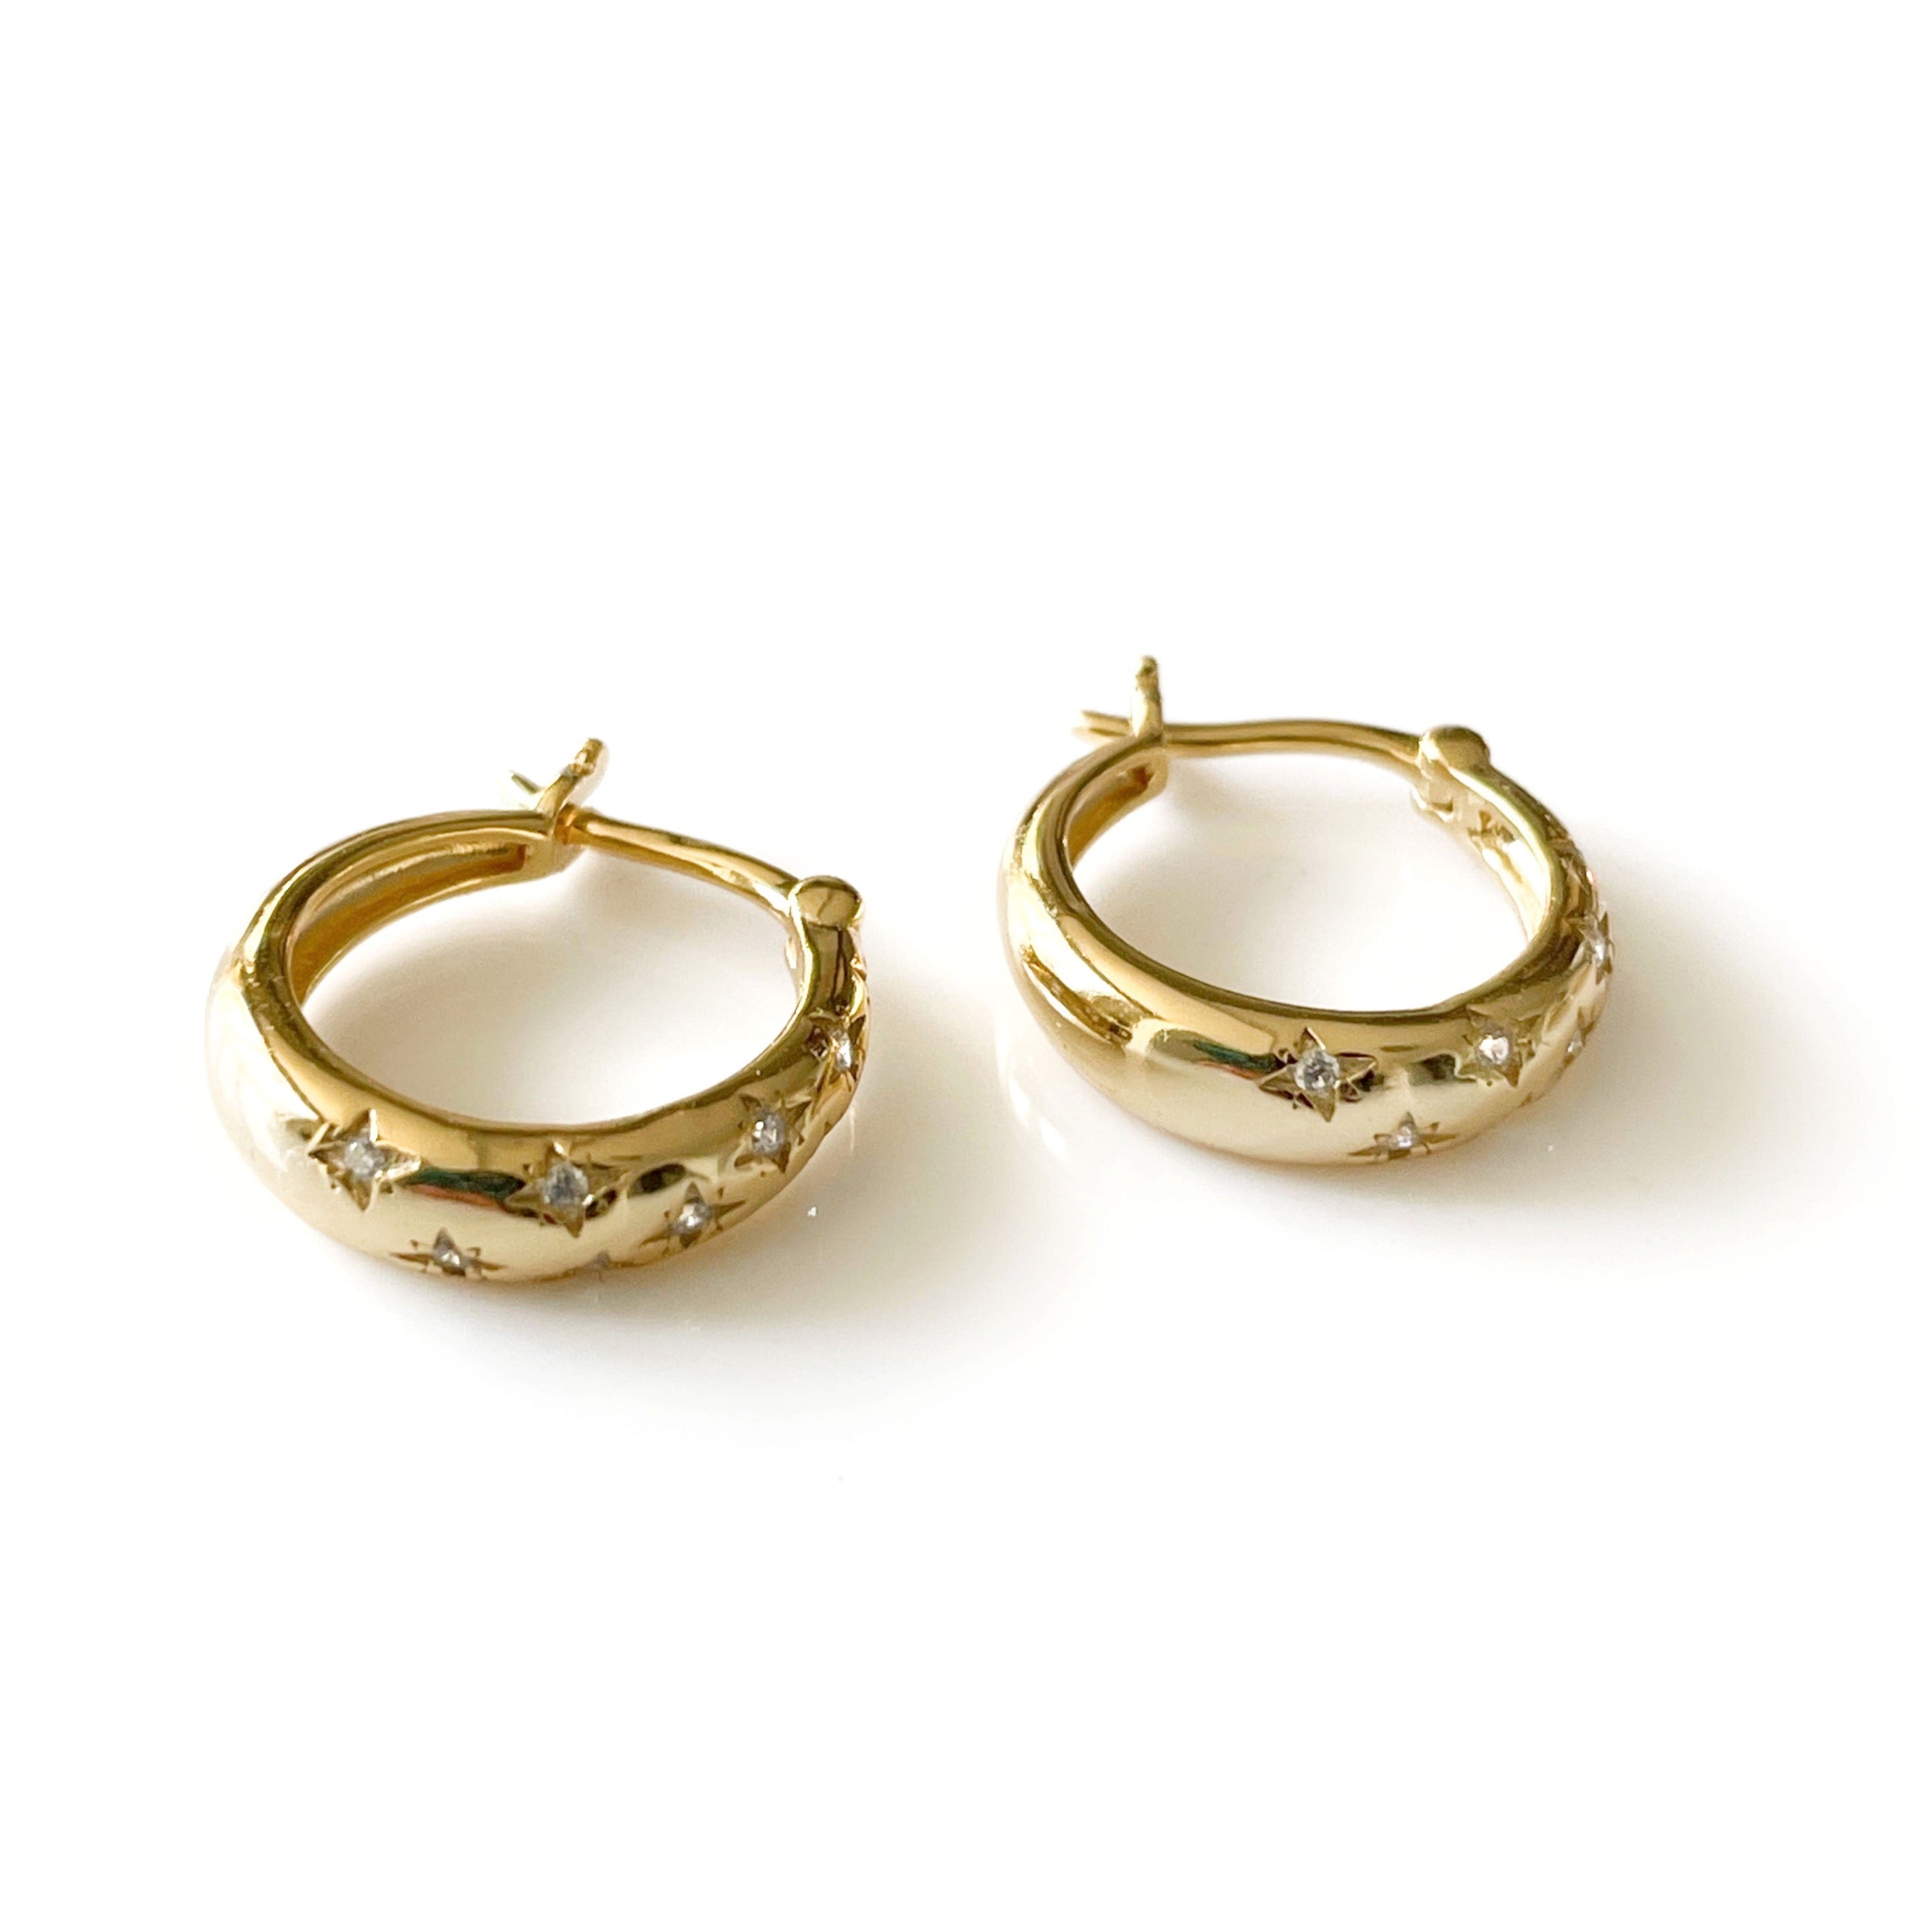 Celeste Luxe Sterling Silver 18k Gold Plated Earrings